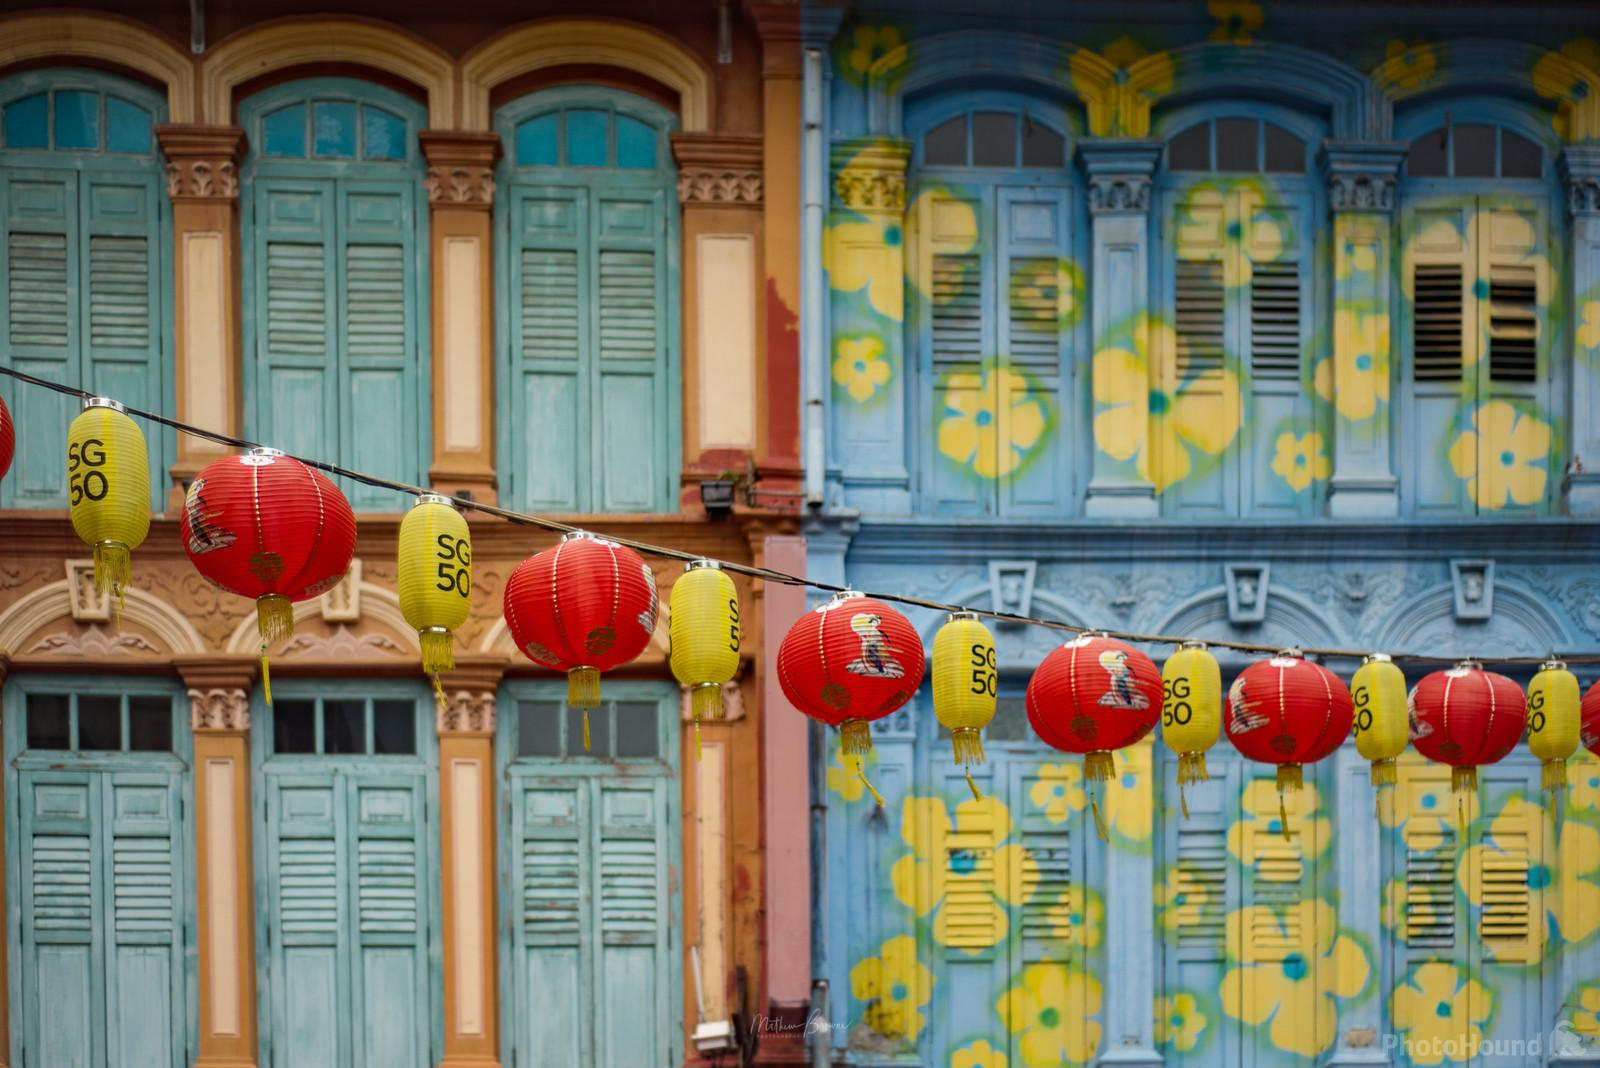 Image of Chinatown by Mathew Browne